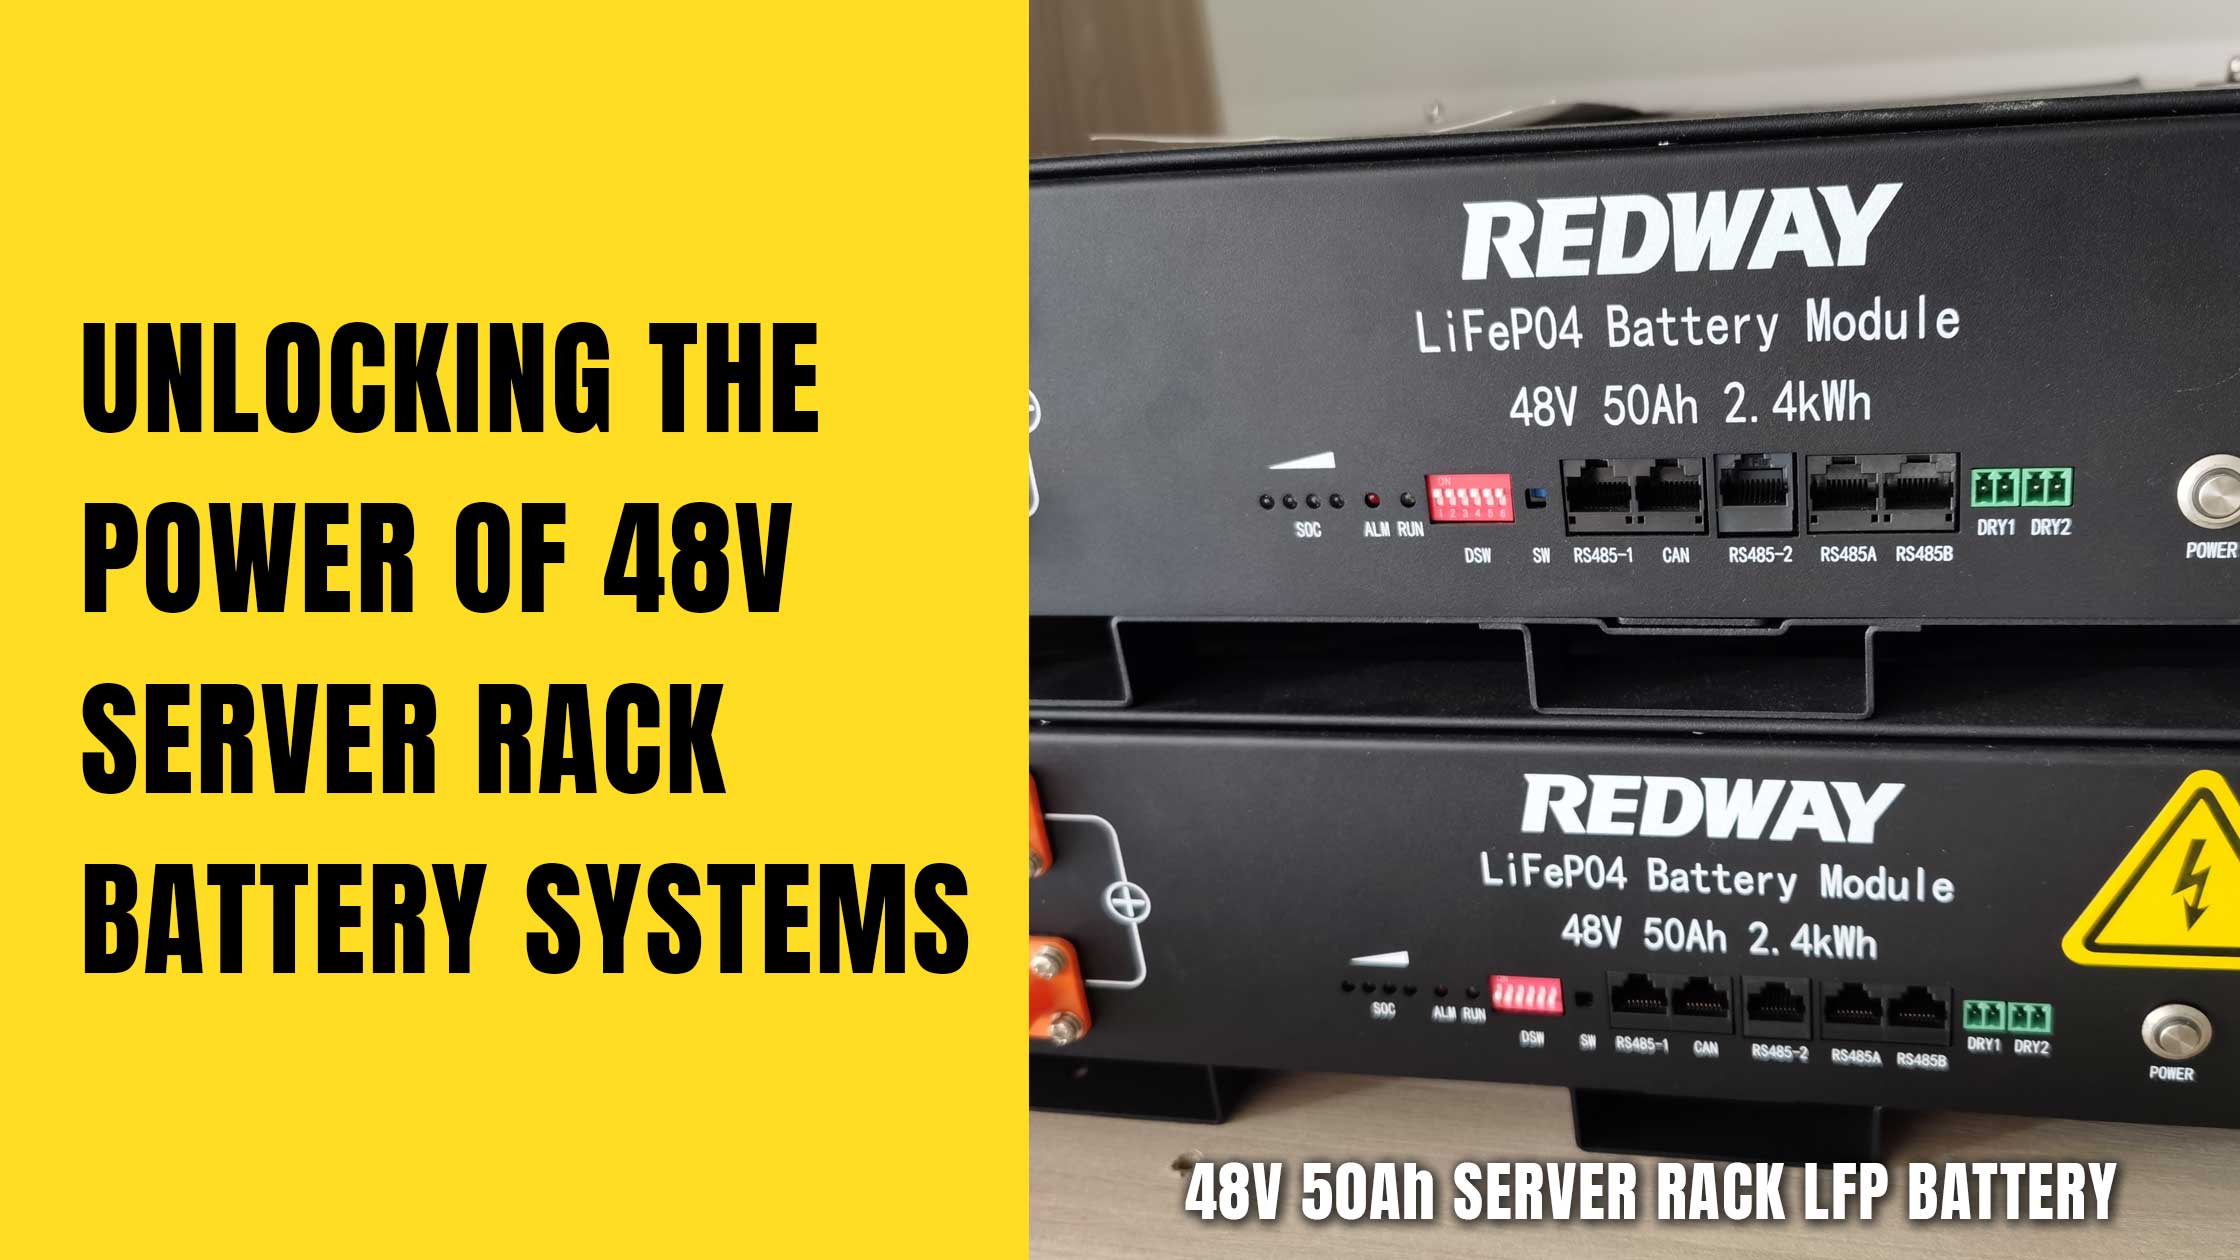 Unlocking The Power of 48V Server Rack Battery Systems, 48v 50ah rack server battery lifepo4 redway